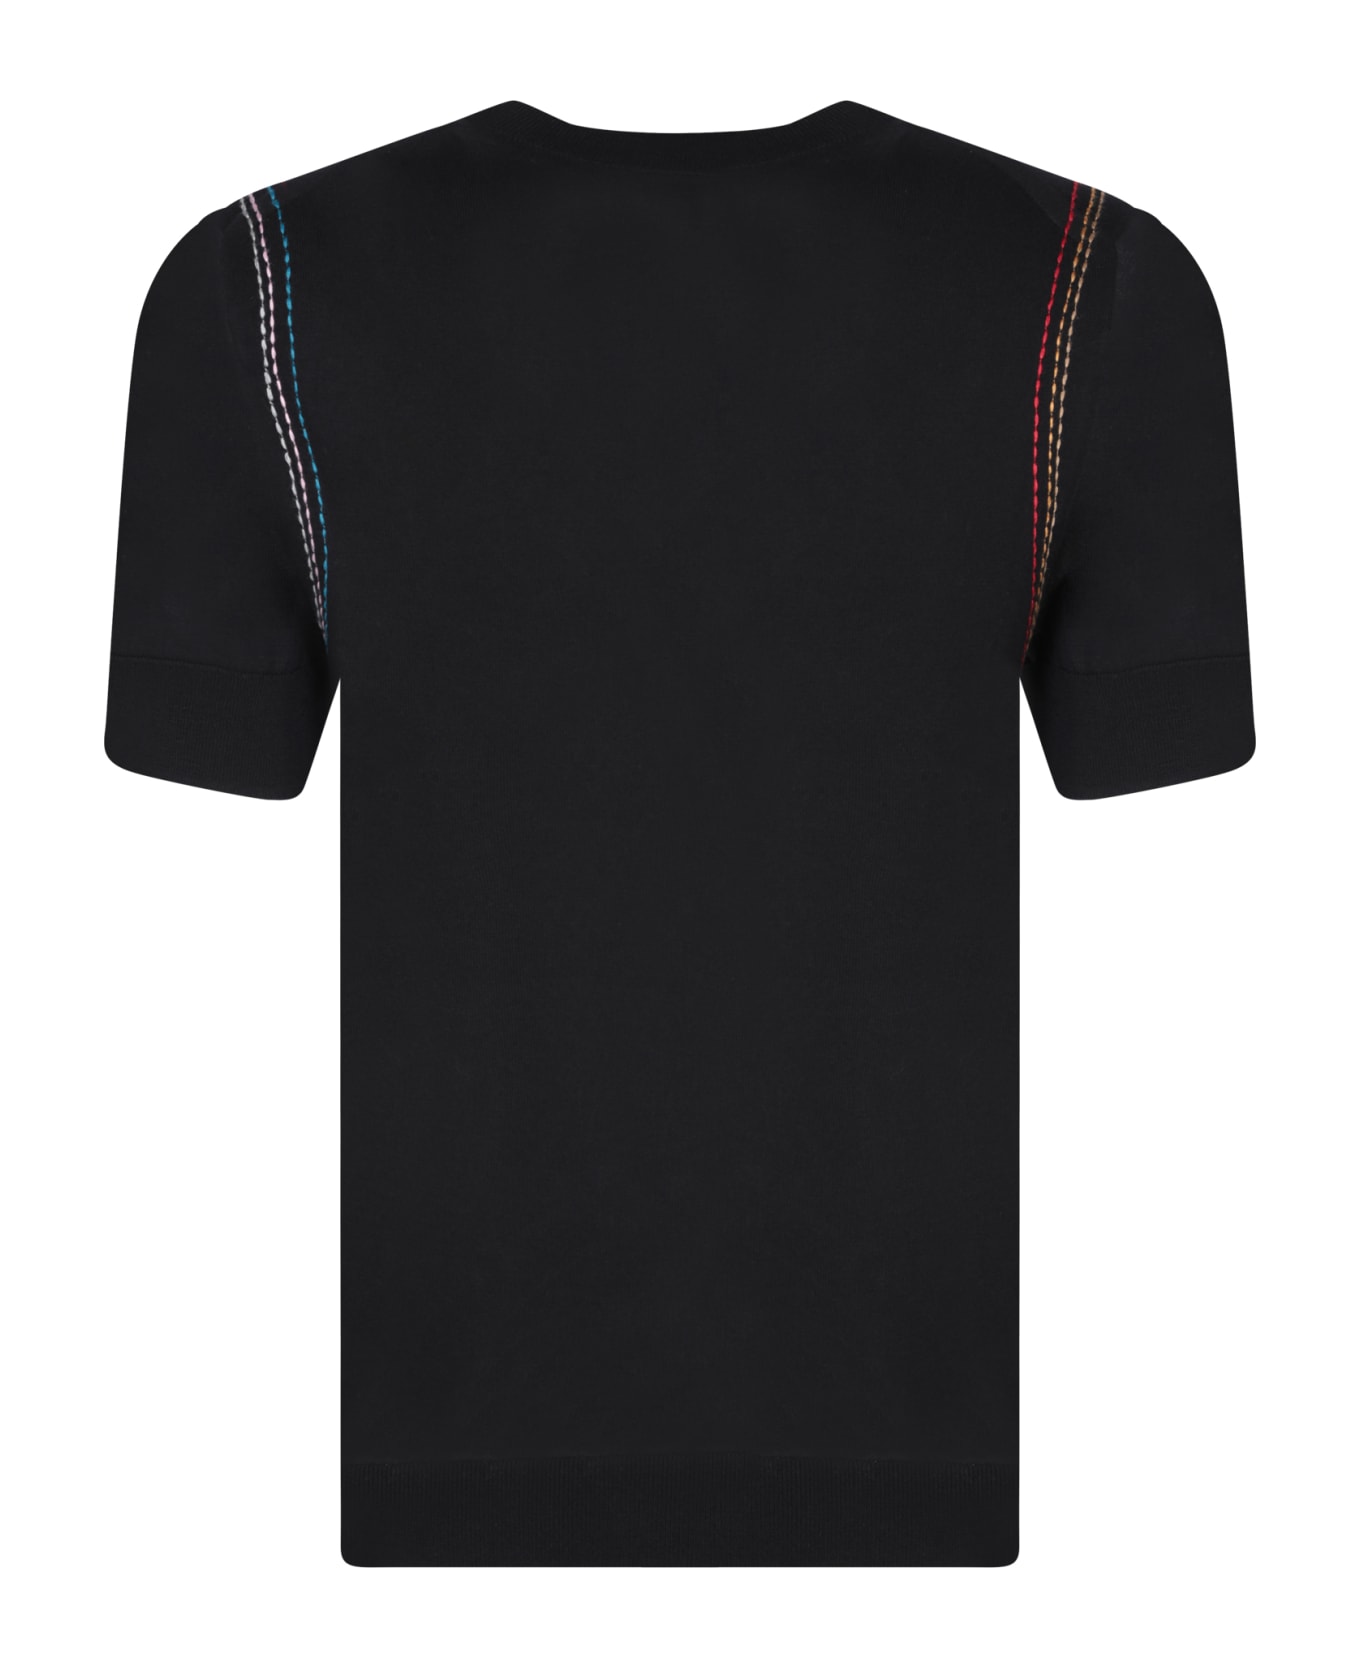 Paul Smith Short Sleeves Black T-shirt - Black